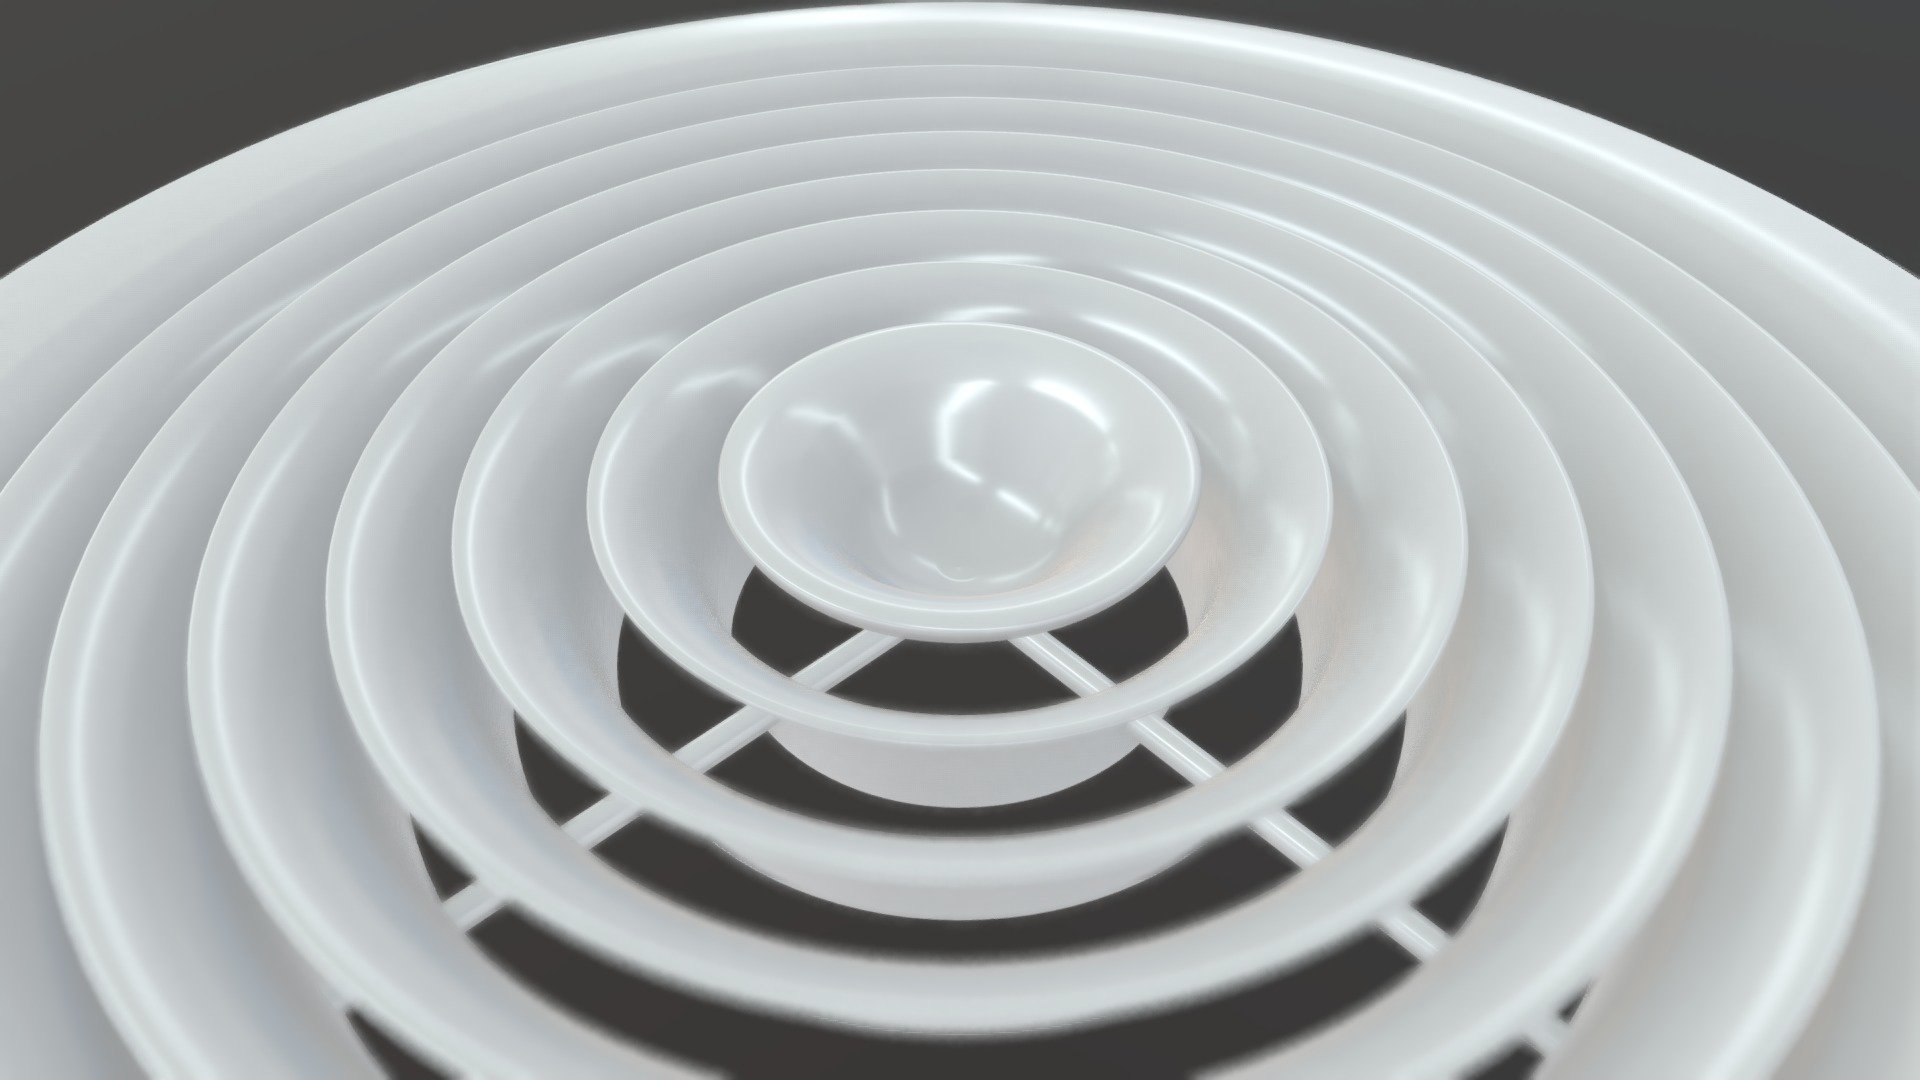 ROUND CEILING DIFFUSER FLAT
دریچه سقفی گرد تخت
 - (ROC FL) SHAHROKHI TECHNICAL INSTITUTE - 3D model by sharifbagheri 3d model